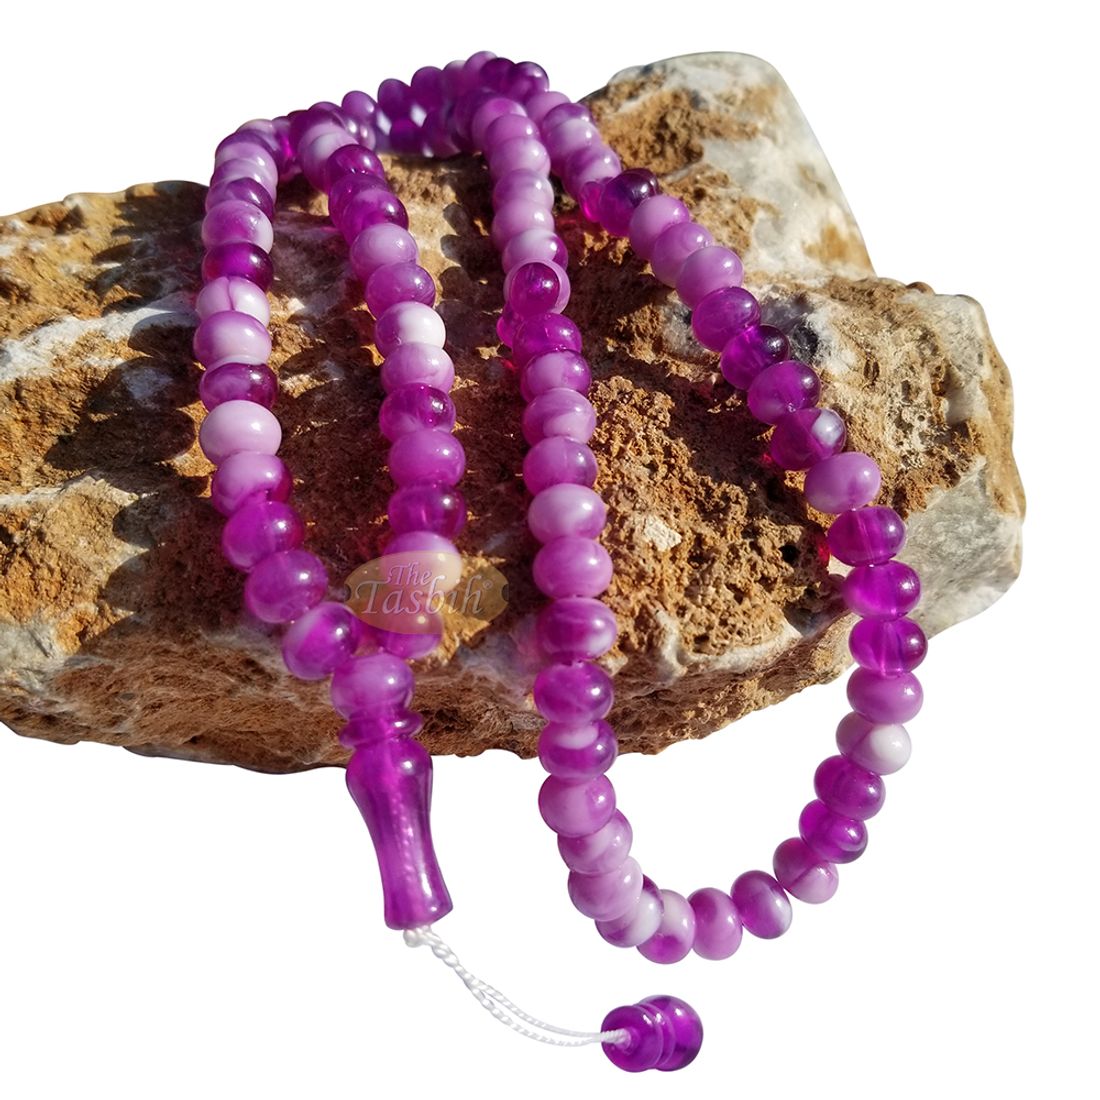 Muslim Prayer Beads – Marble Purple 7x9mm Oval Plastic Beads 99ct Dhikr Tasbih Sibha